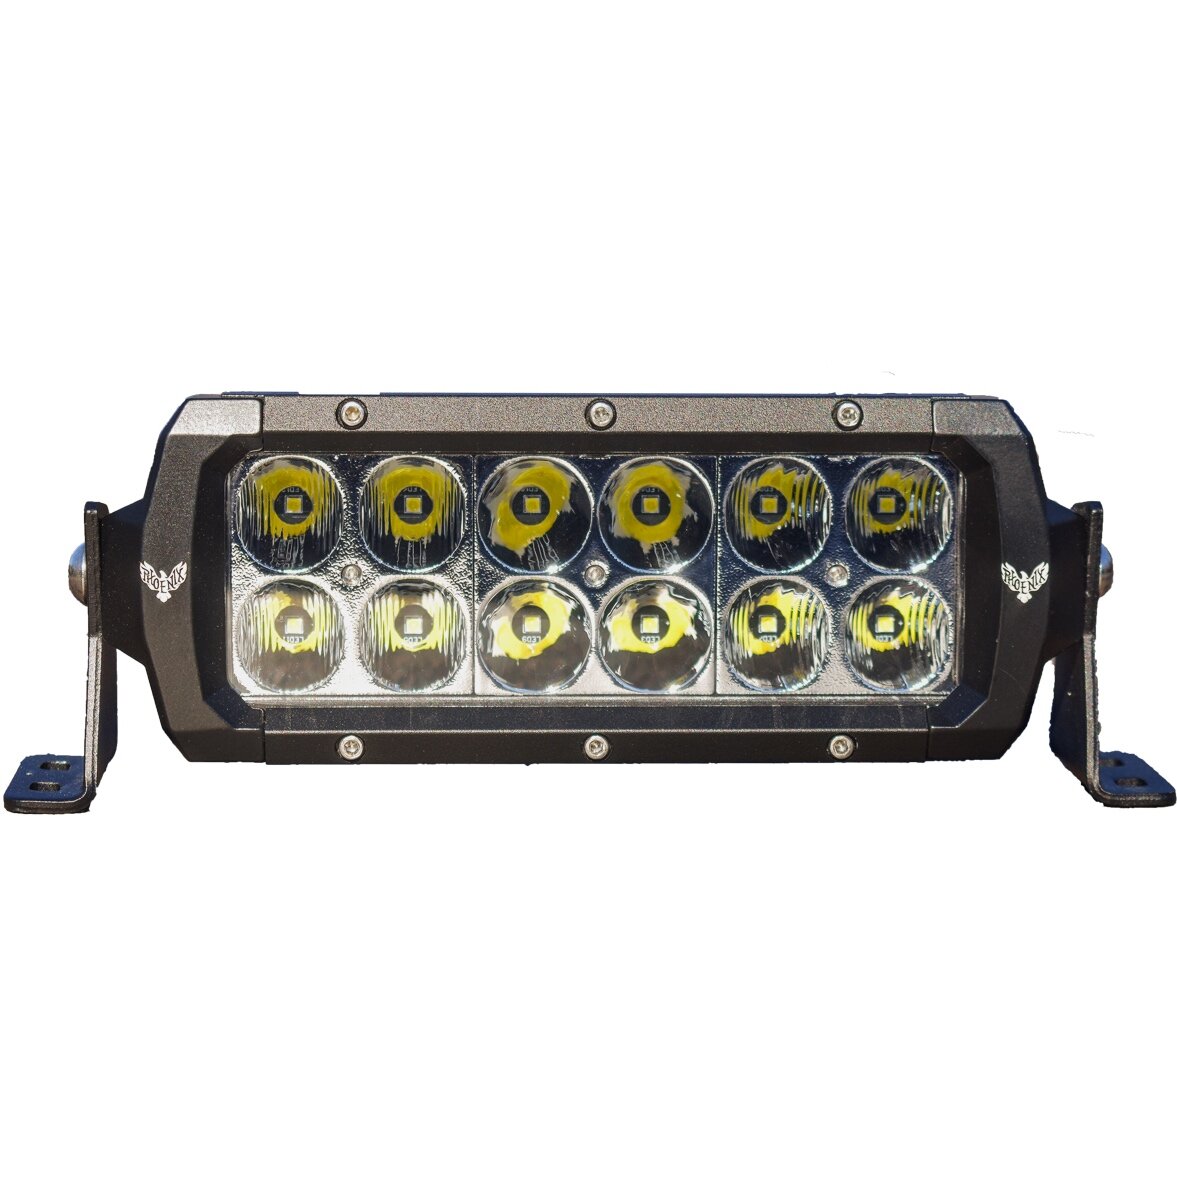 LPL LEDスティックライトミニプロVLS-4000FXP L26117